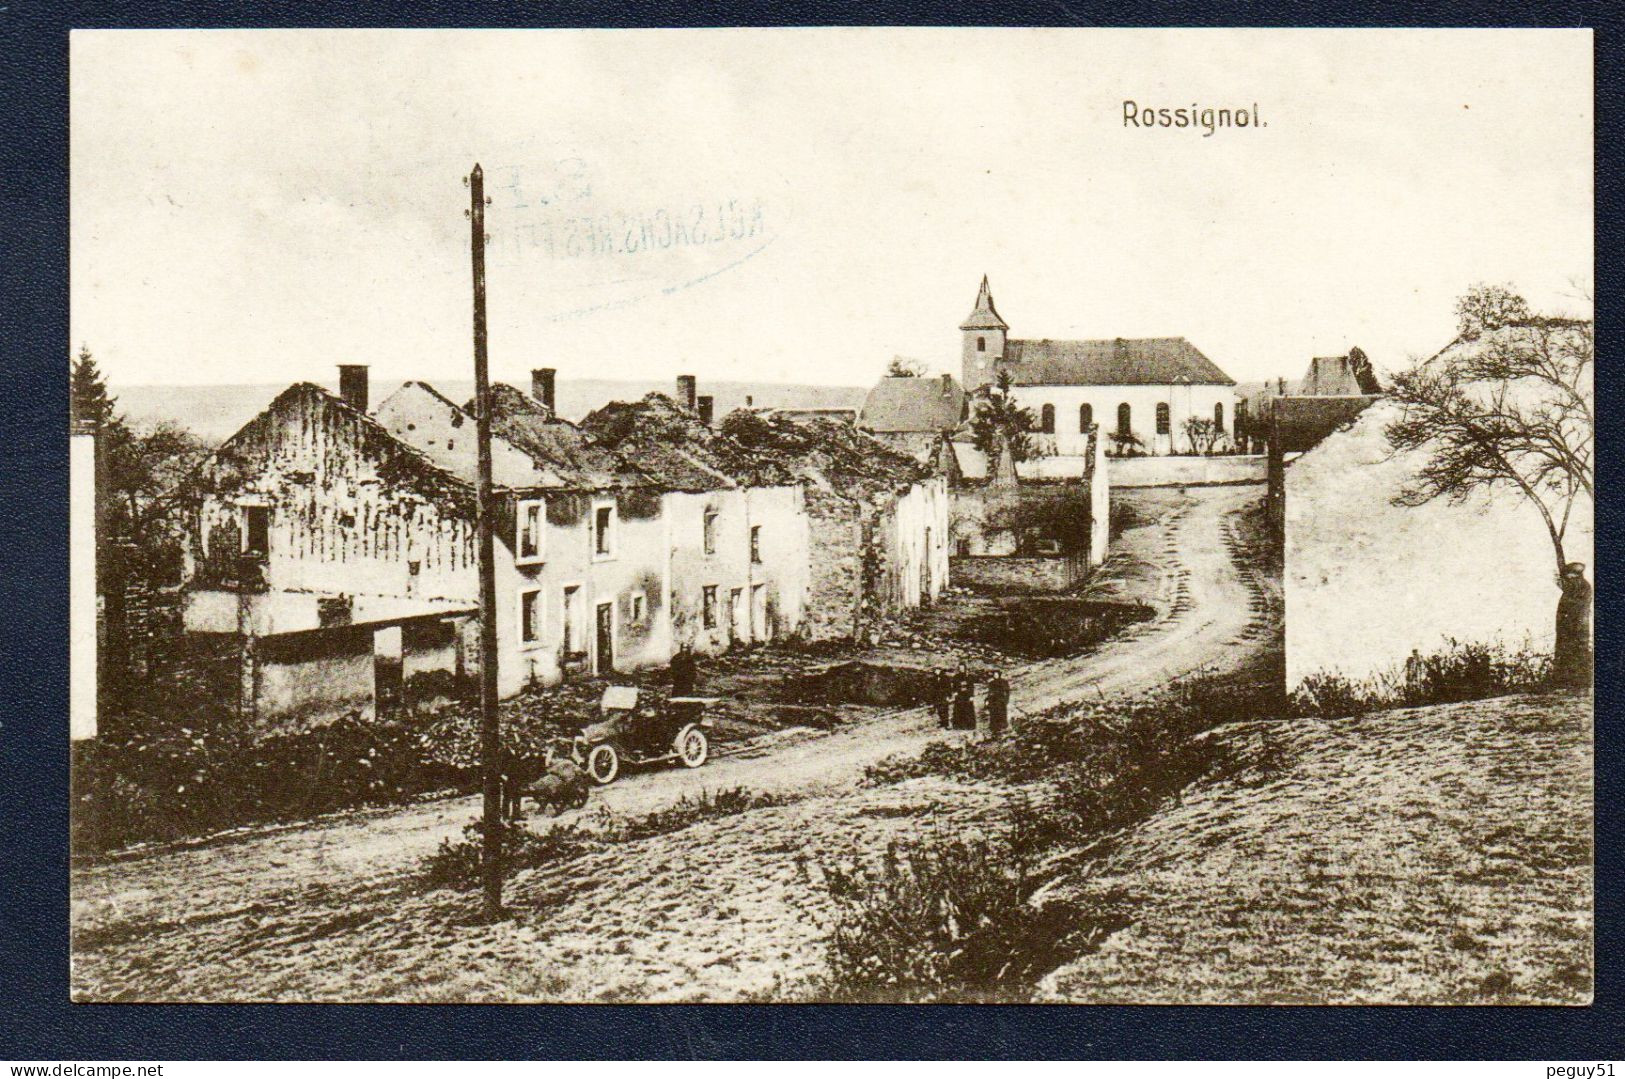 Rossignol (Tintigny). Eglise St. Nicolas. Maisons Bombardées. Feldpost Der 23. Reserve-Division. Mai 1915 - Fauvillers